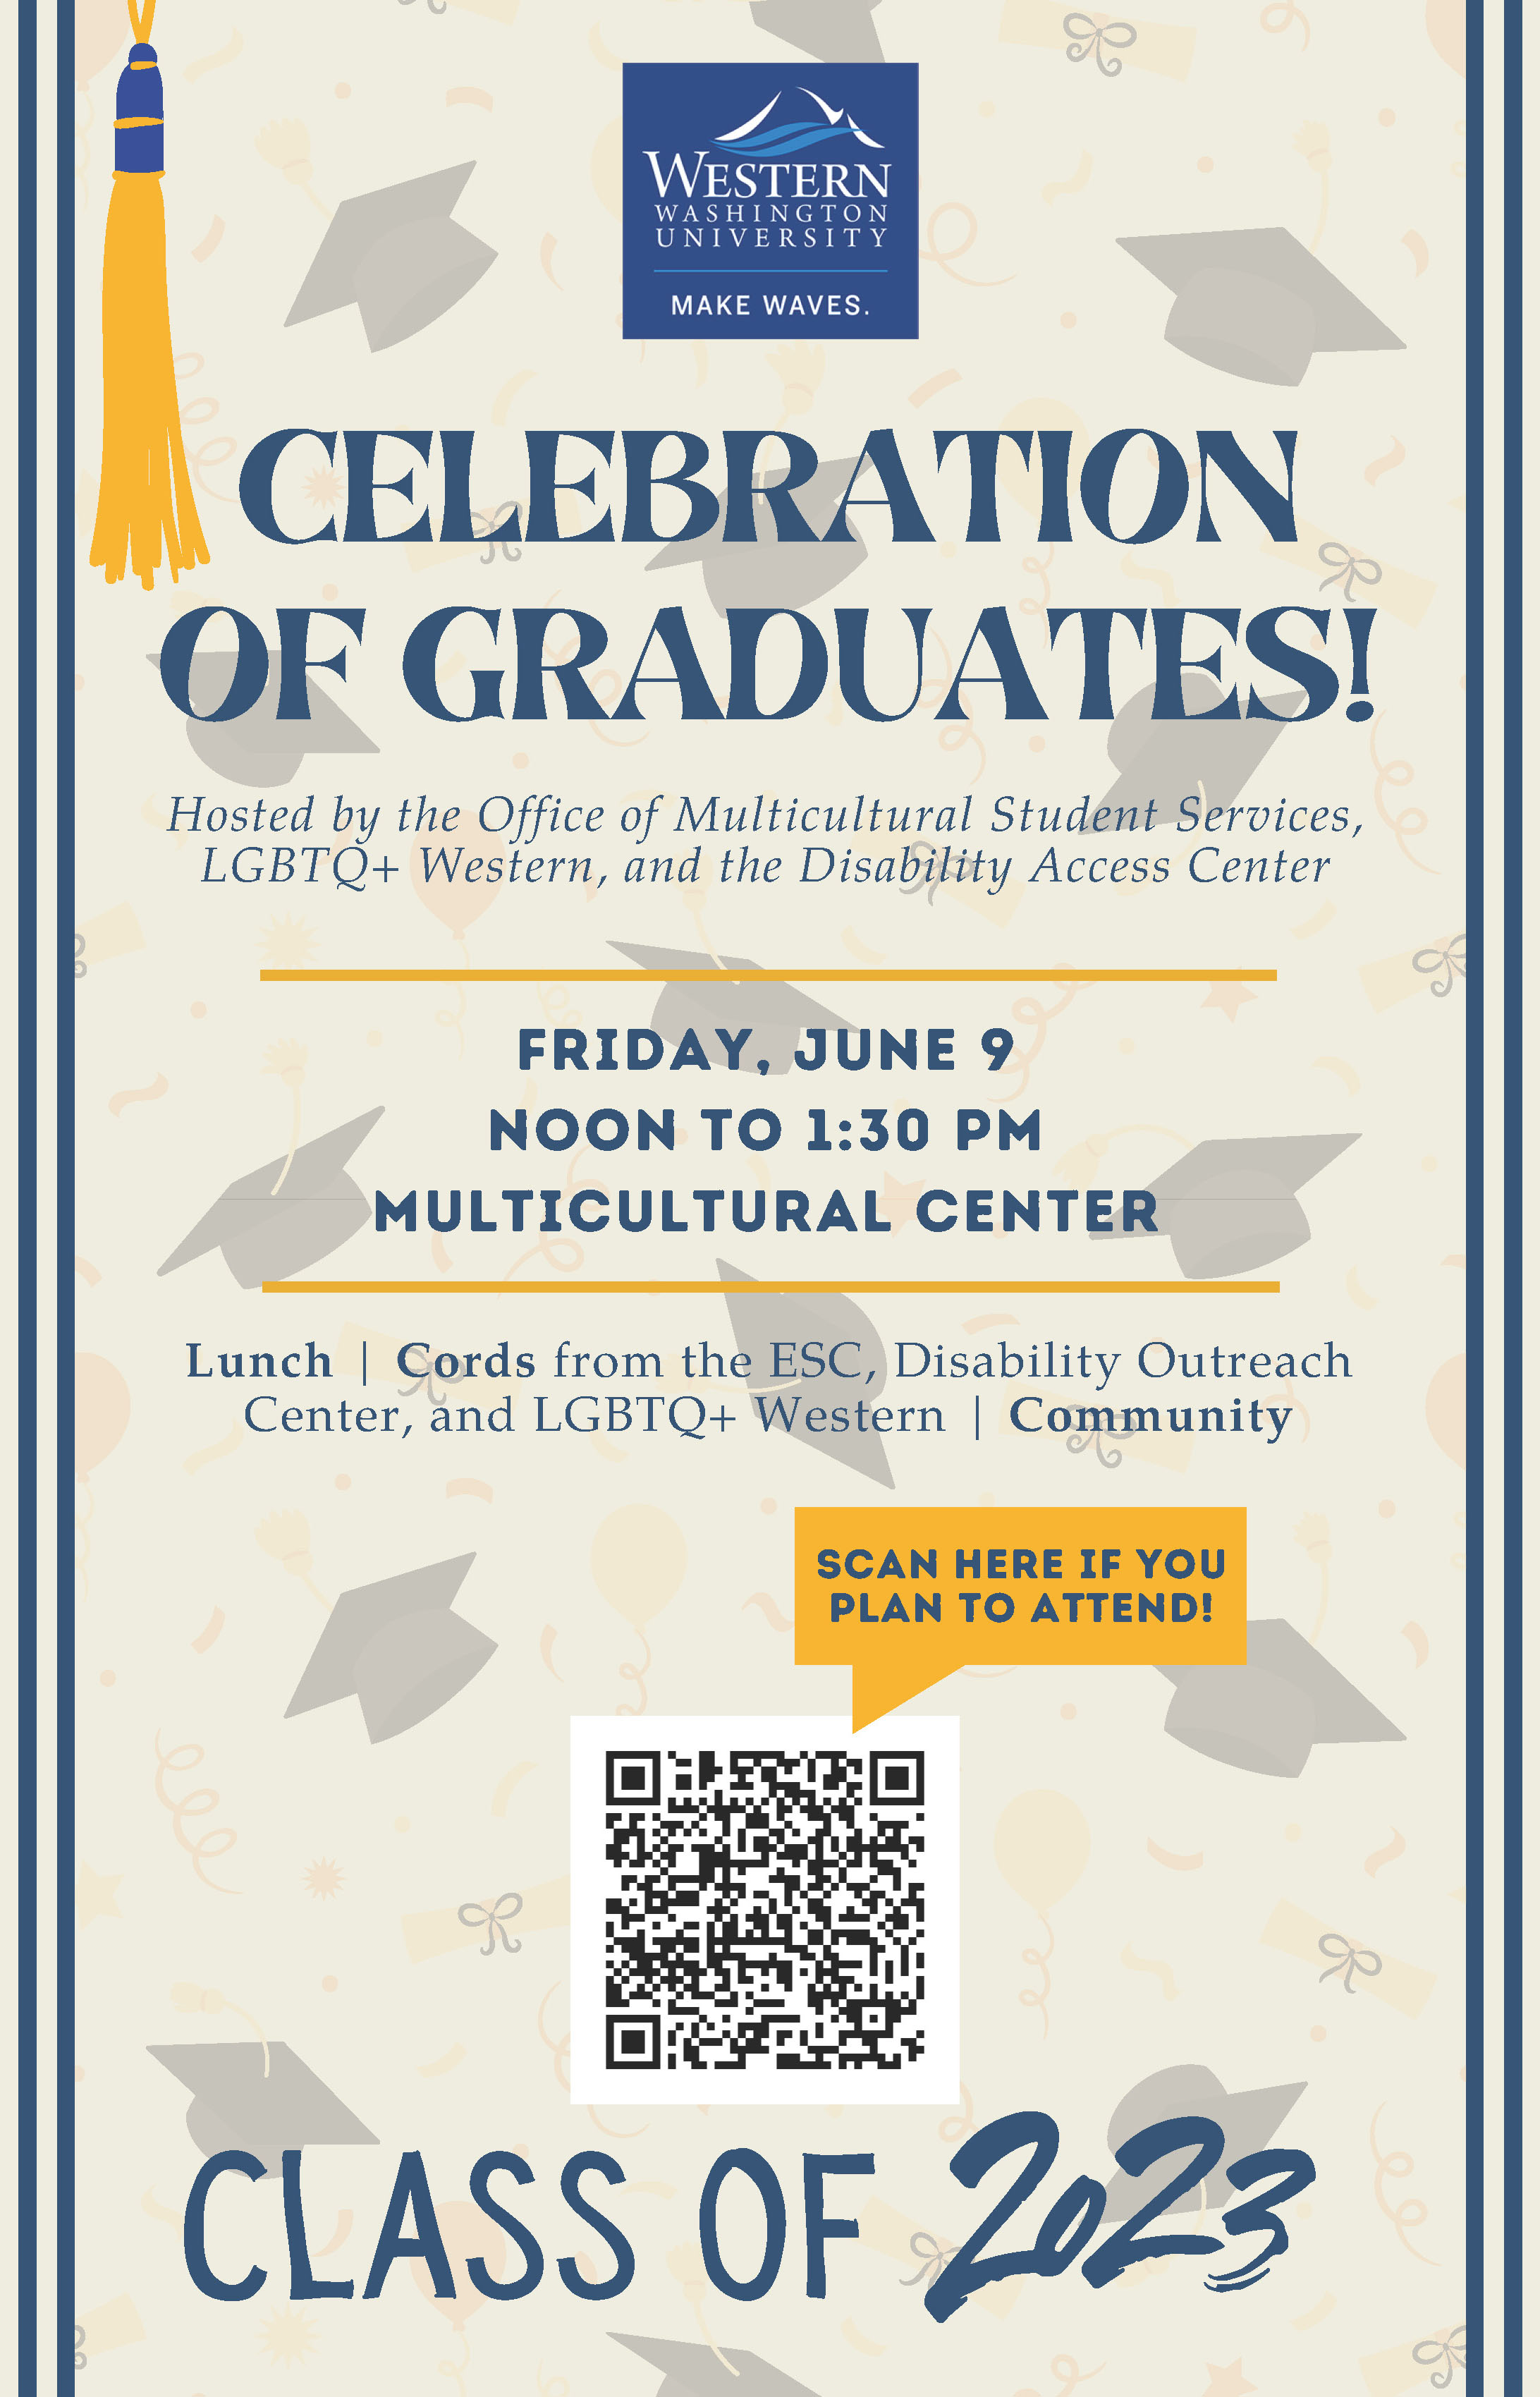 Celebration of Graduates decorative event flyer, details listed below.